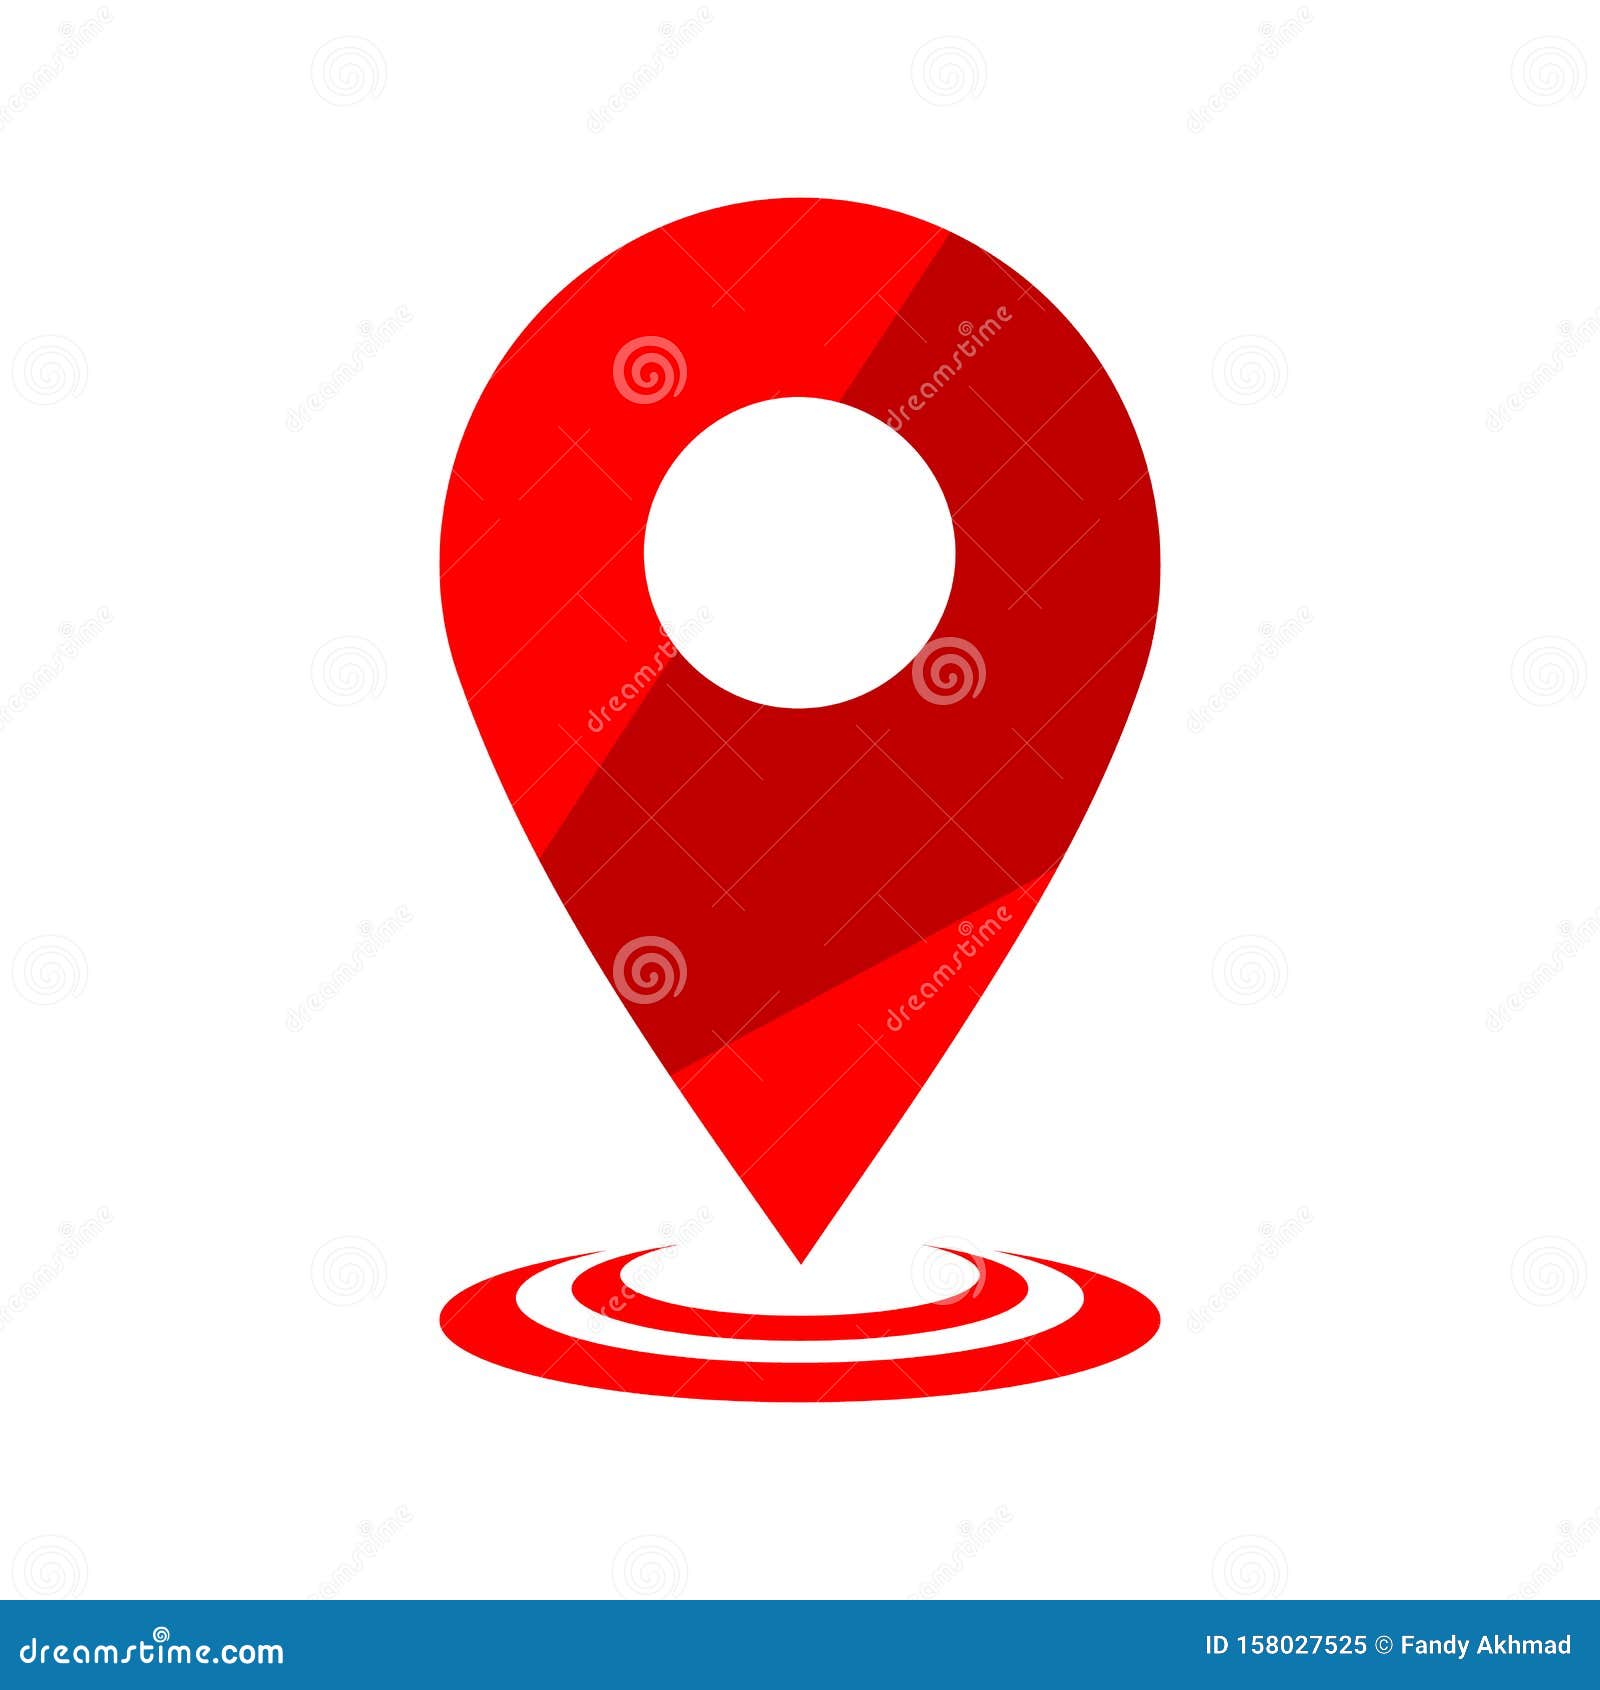 gps icon  logo . map pointer icon. pin location 